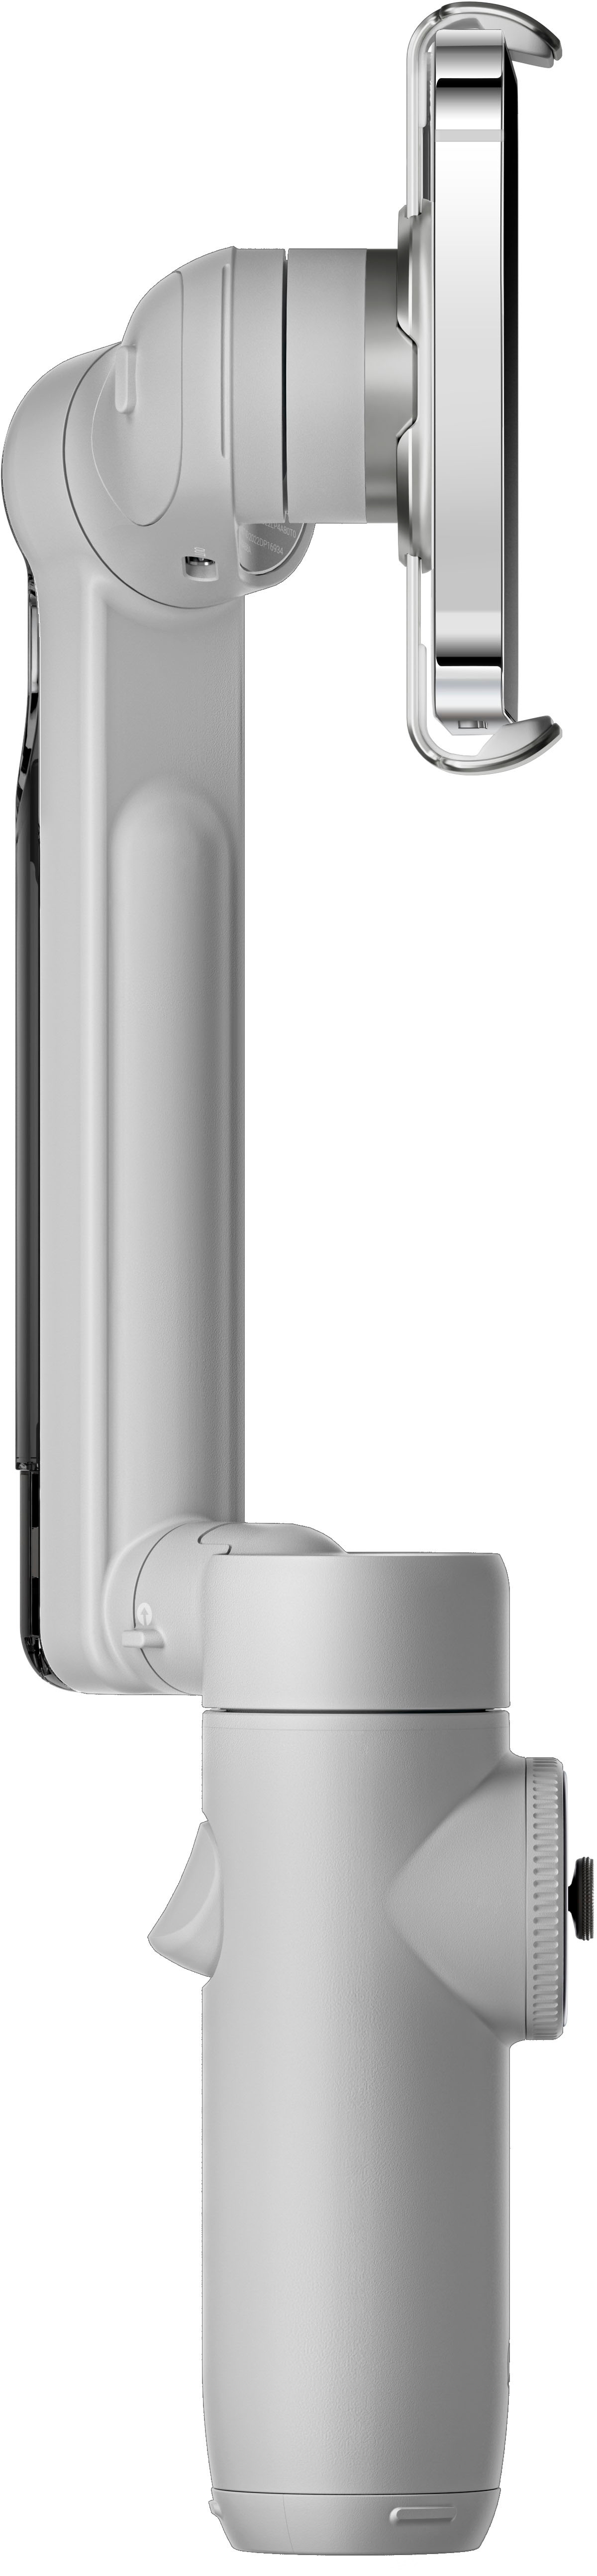 Insta360 Flow Smartphone Gimbal Stabilizer Creator Kit (Gray)